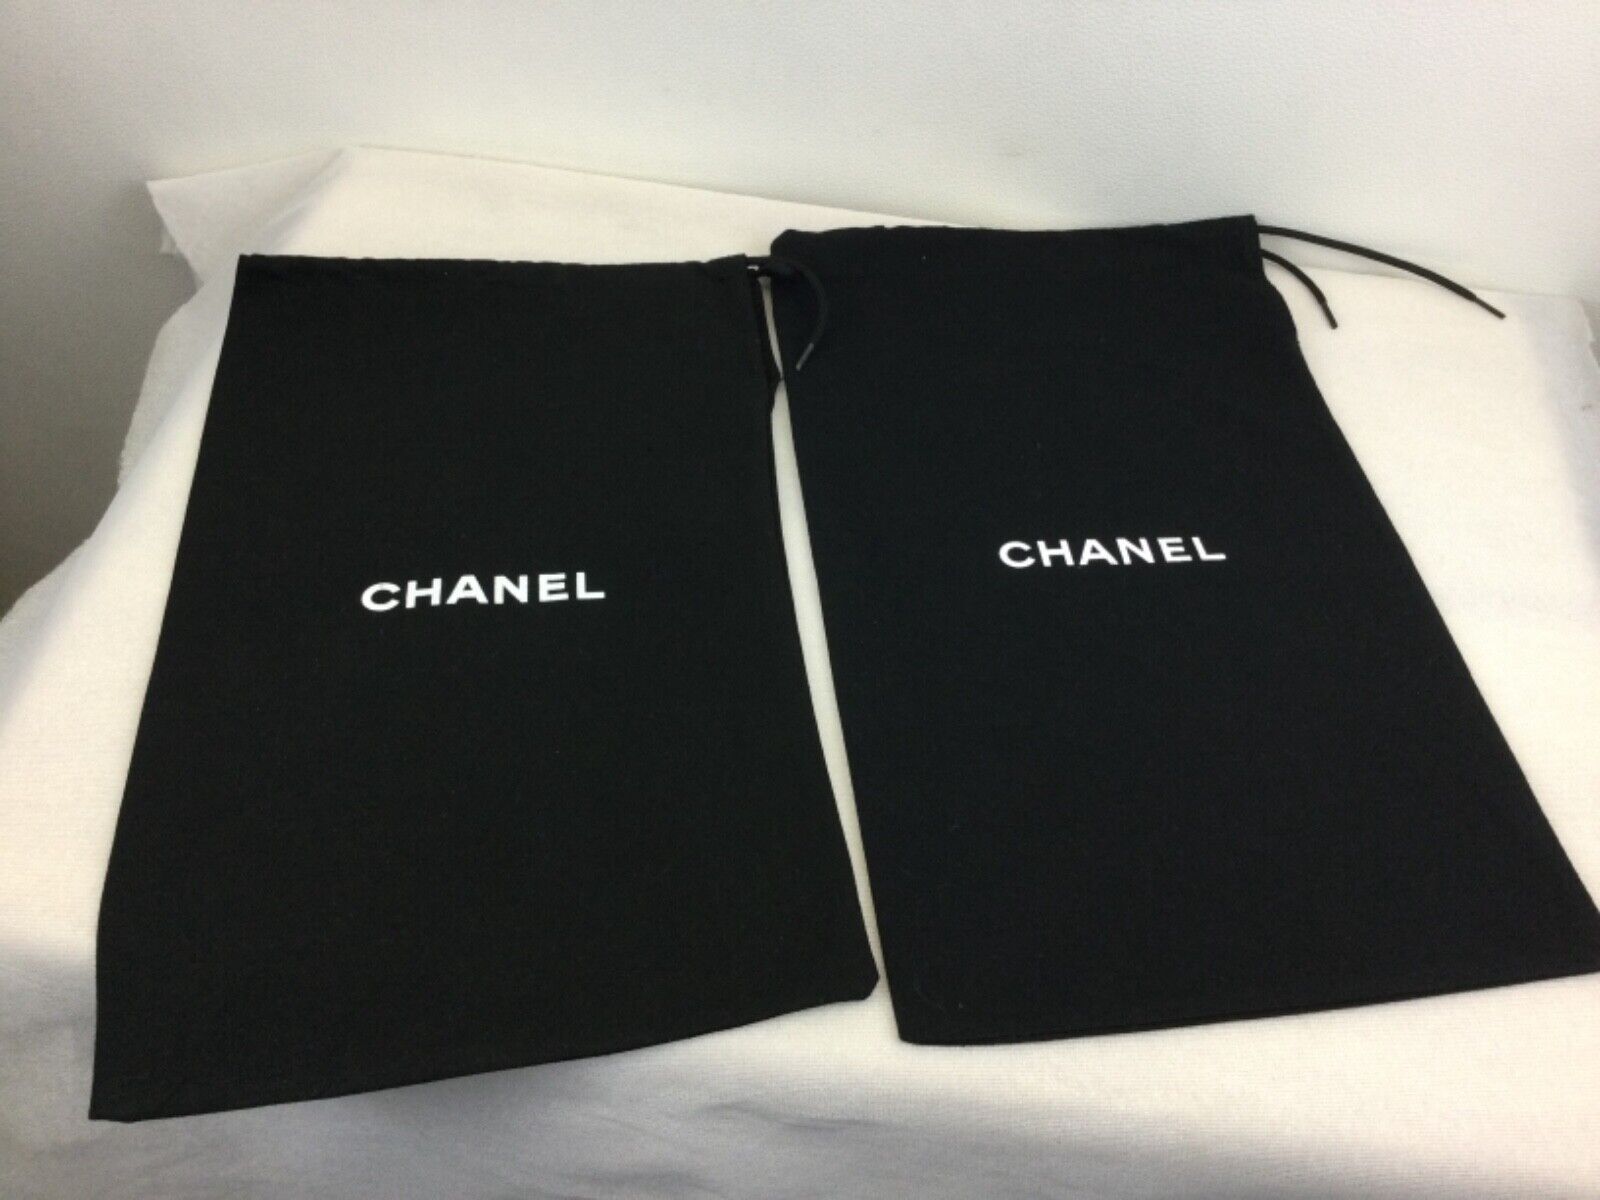 CHANEL BLACK SHOE DUST BAG DUST COVER 2 PIECES BLACK DRAW STRING 12 x 8